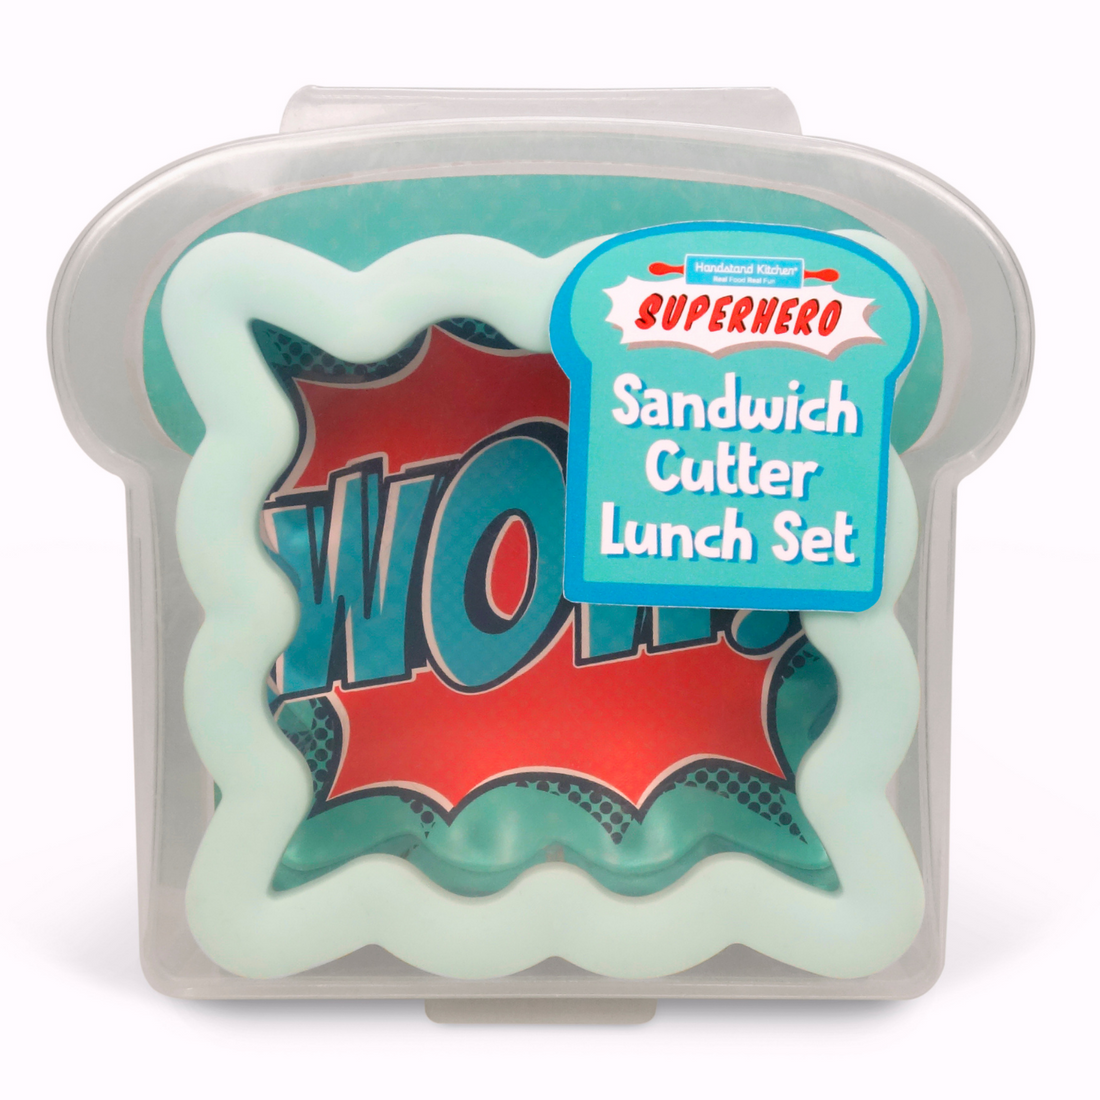 In box image of SUPERHERO Sandwich Cutter Lunch Set